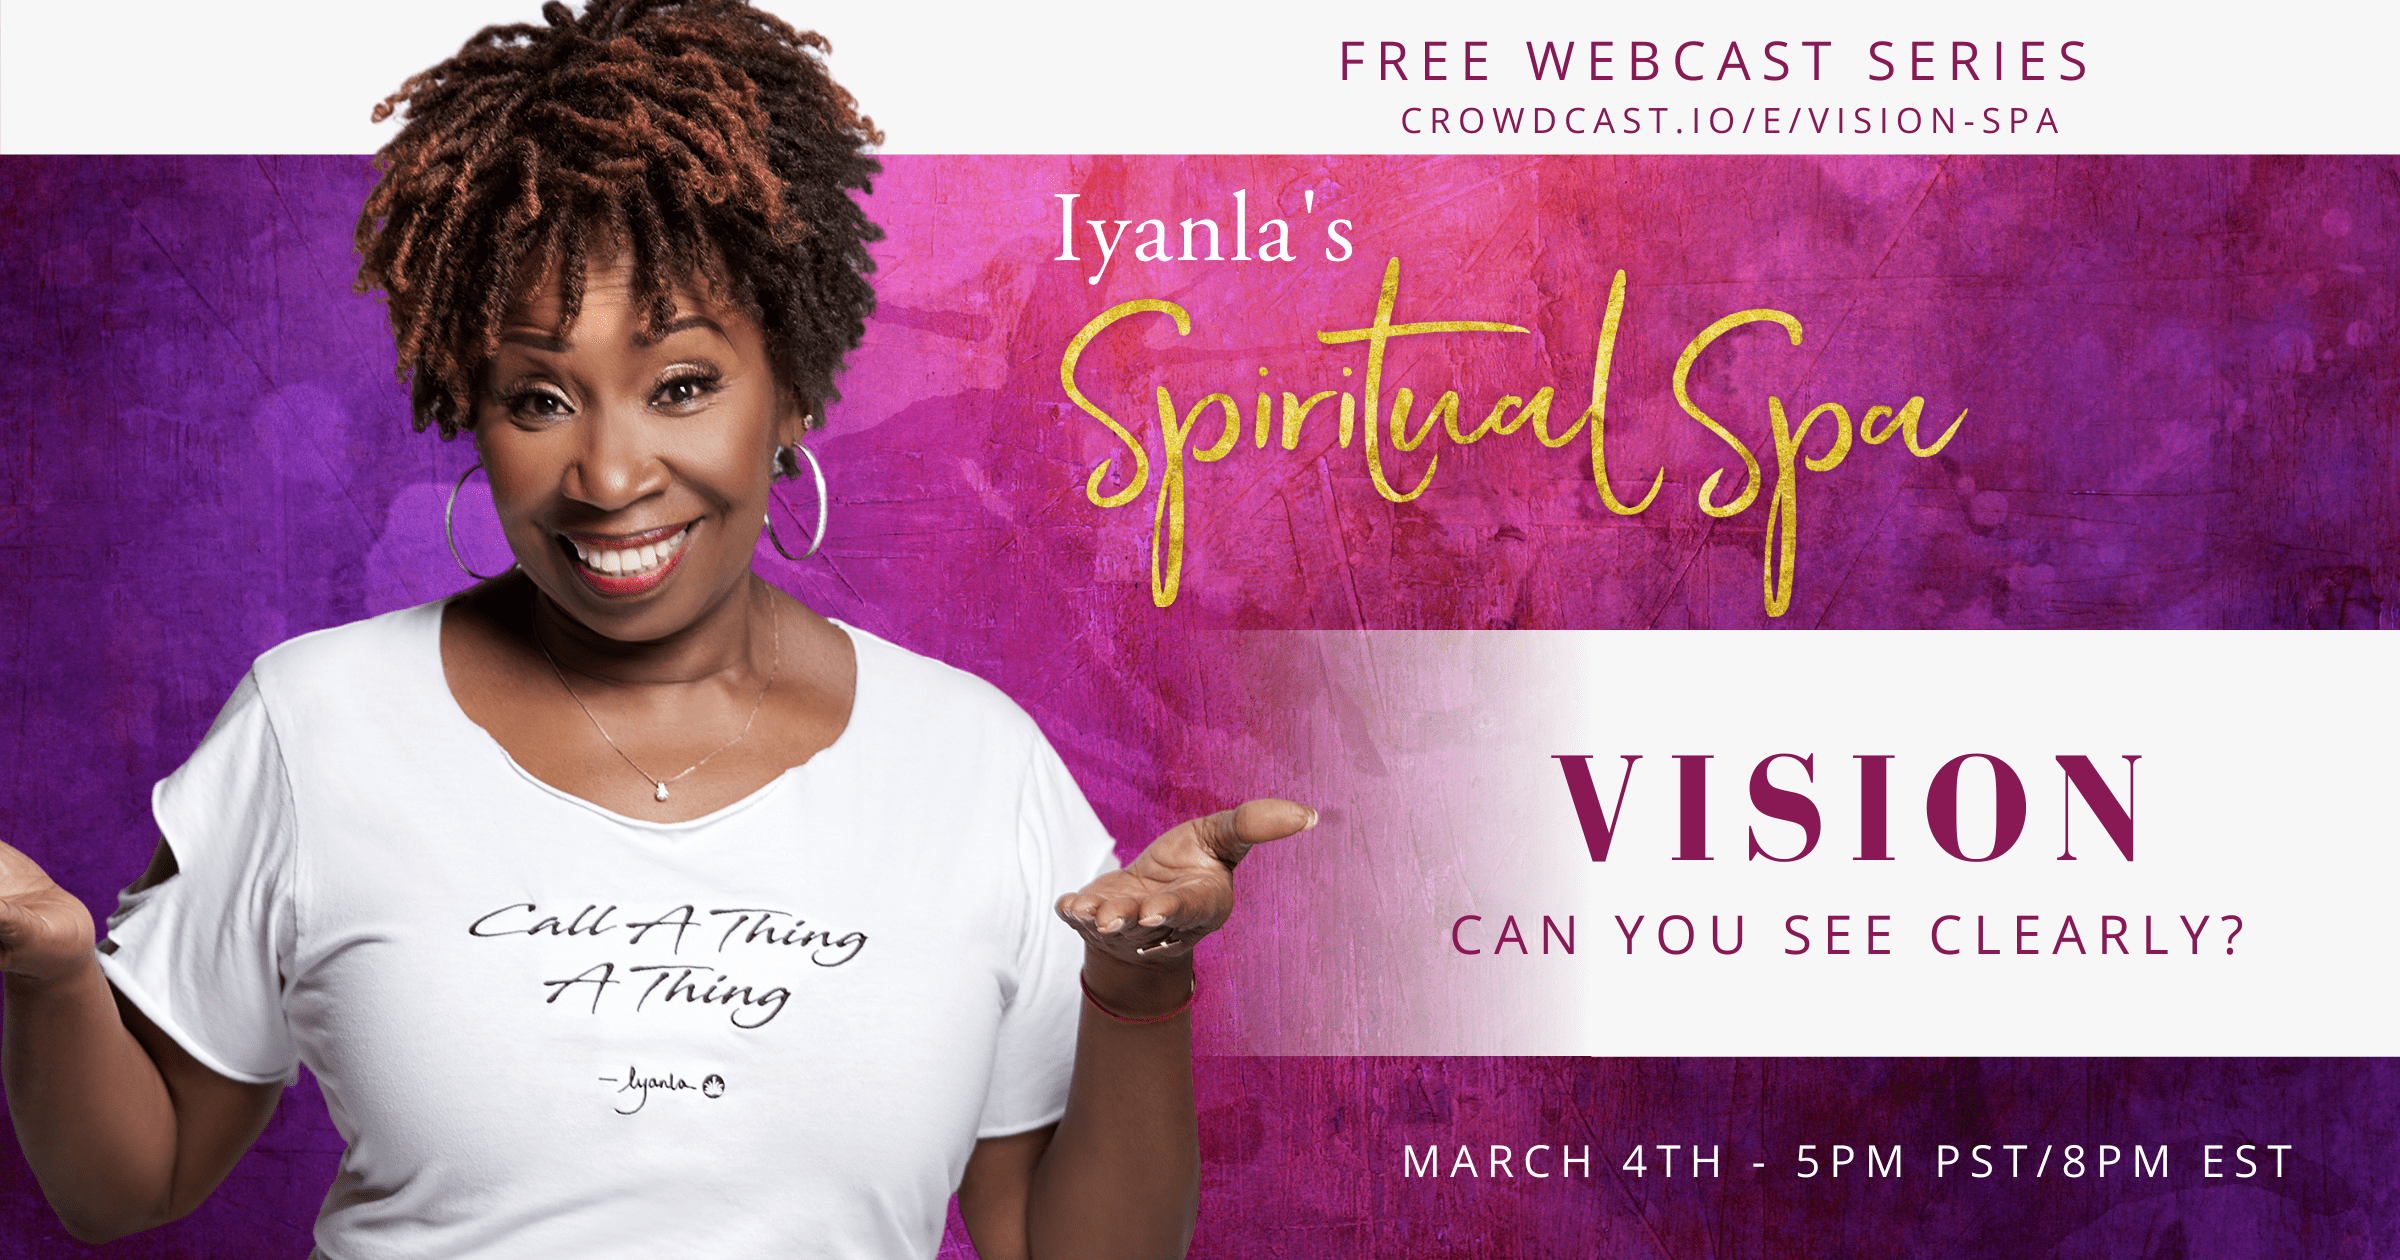 Iyanla Vanzant's Spiritual Spa for March - Vision